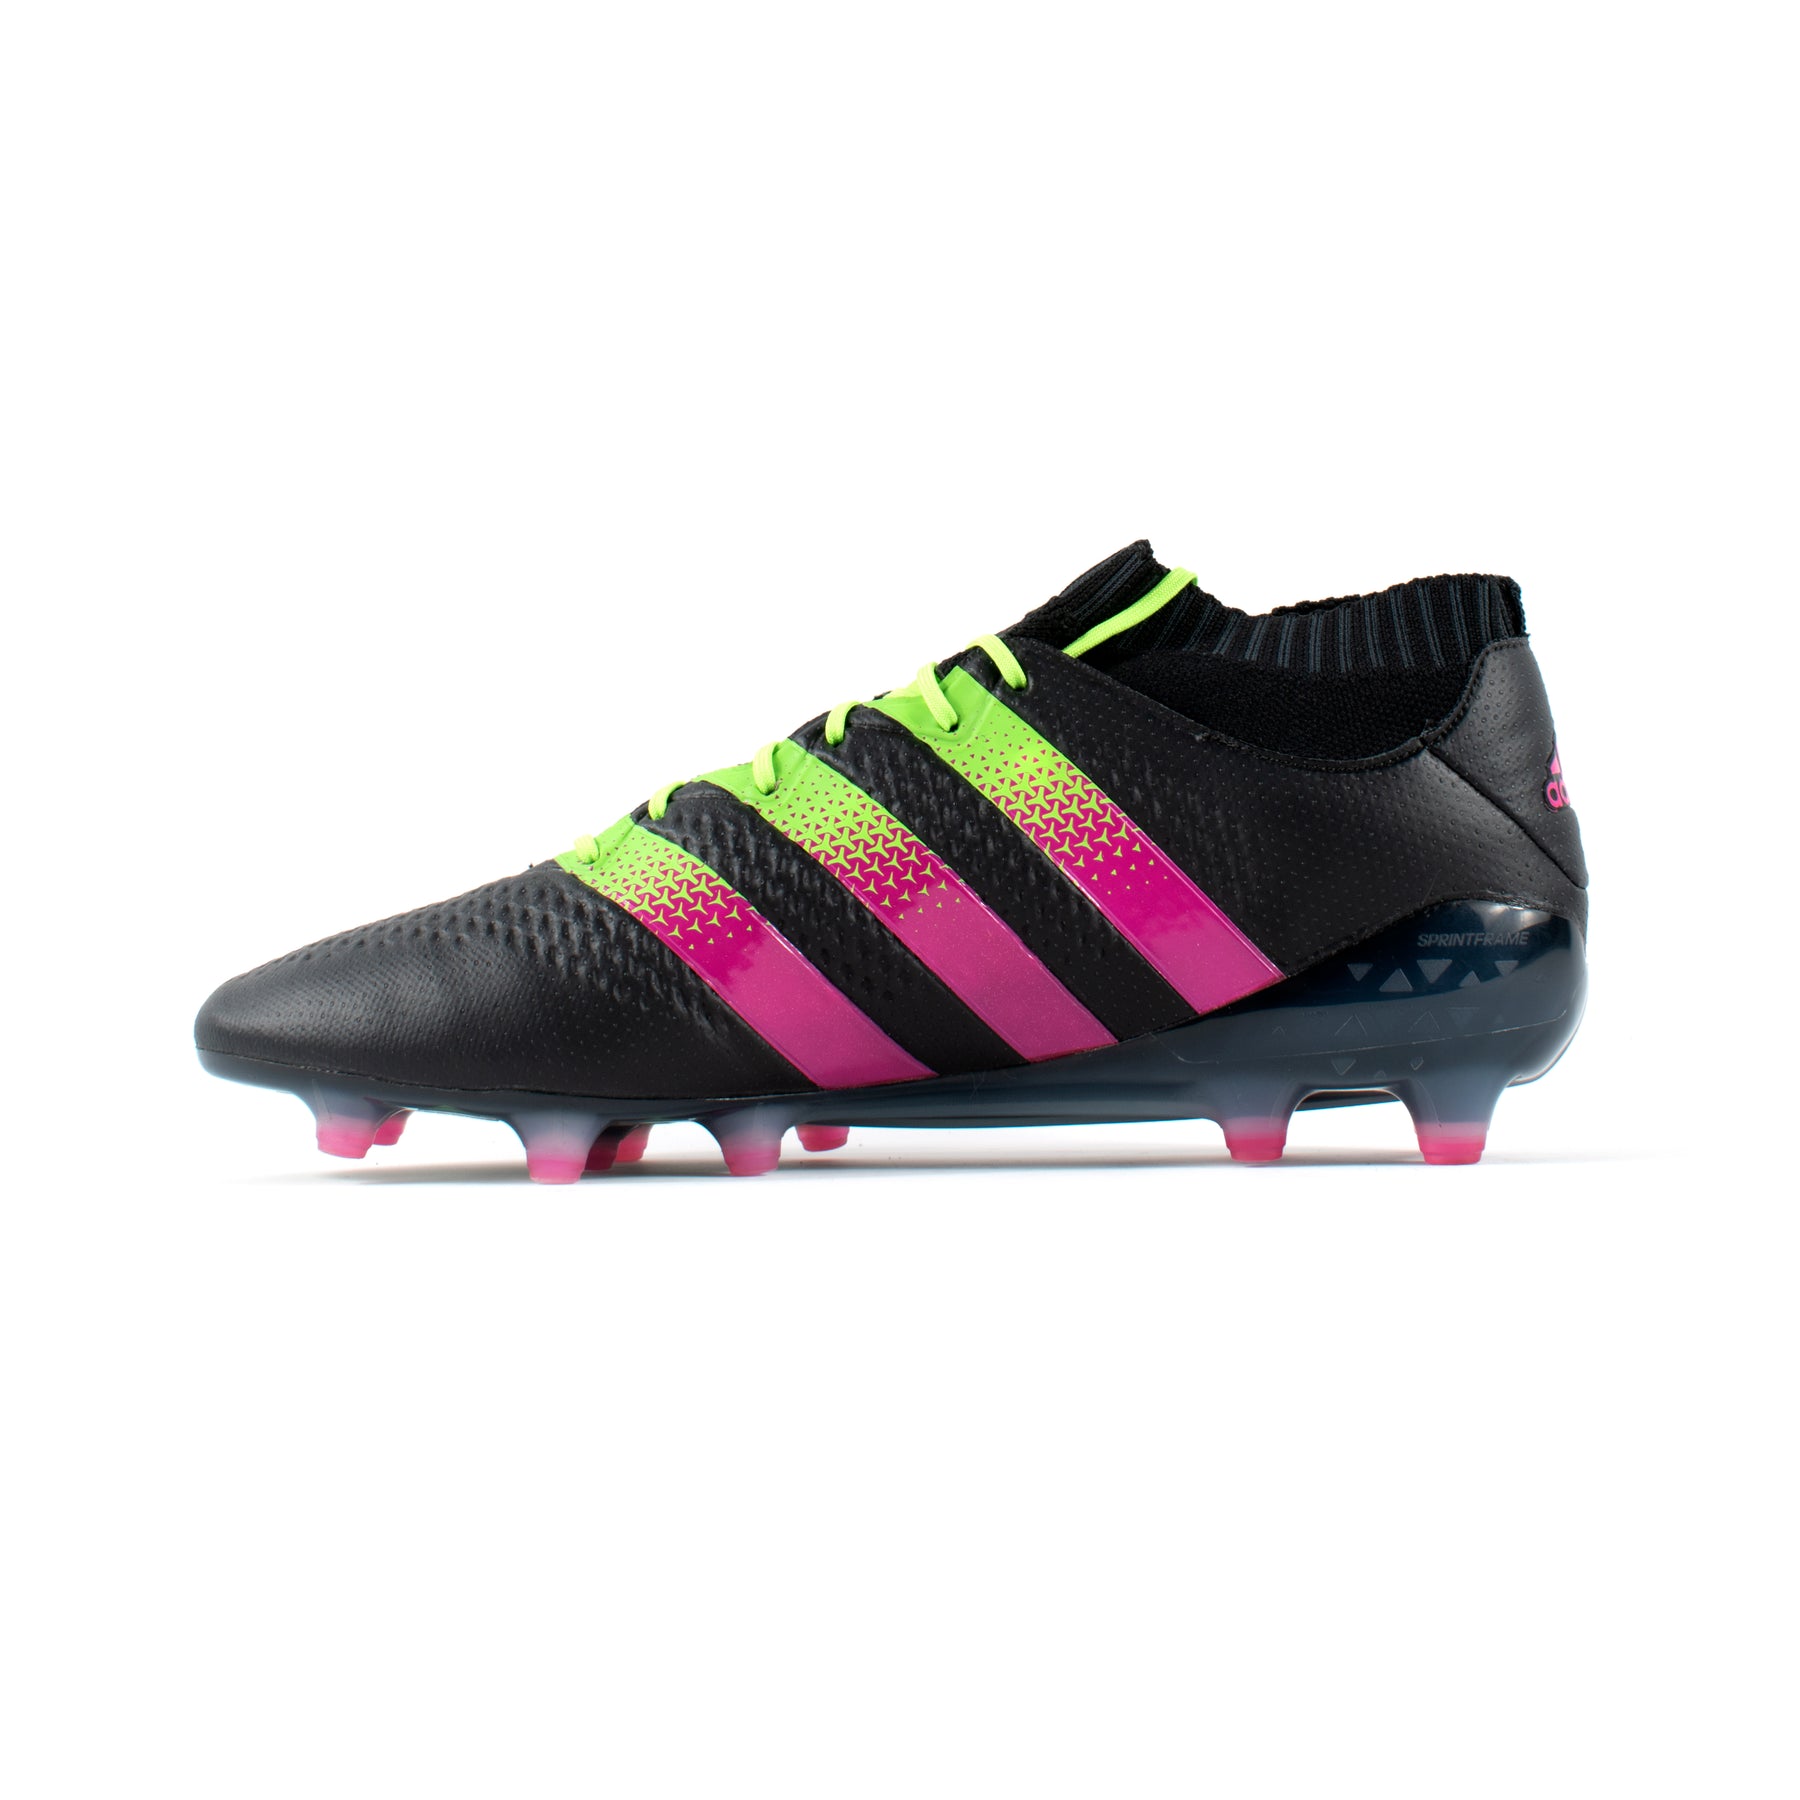 Adidas 16.1 Primeknit Black FG – Classic Soccer Cleats